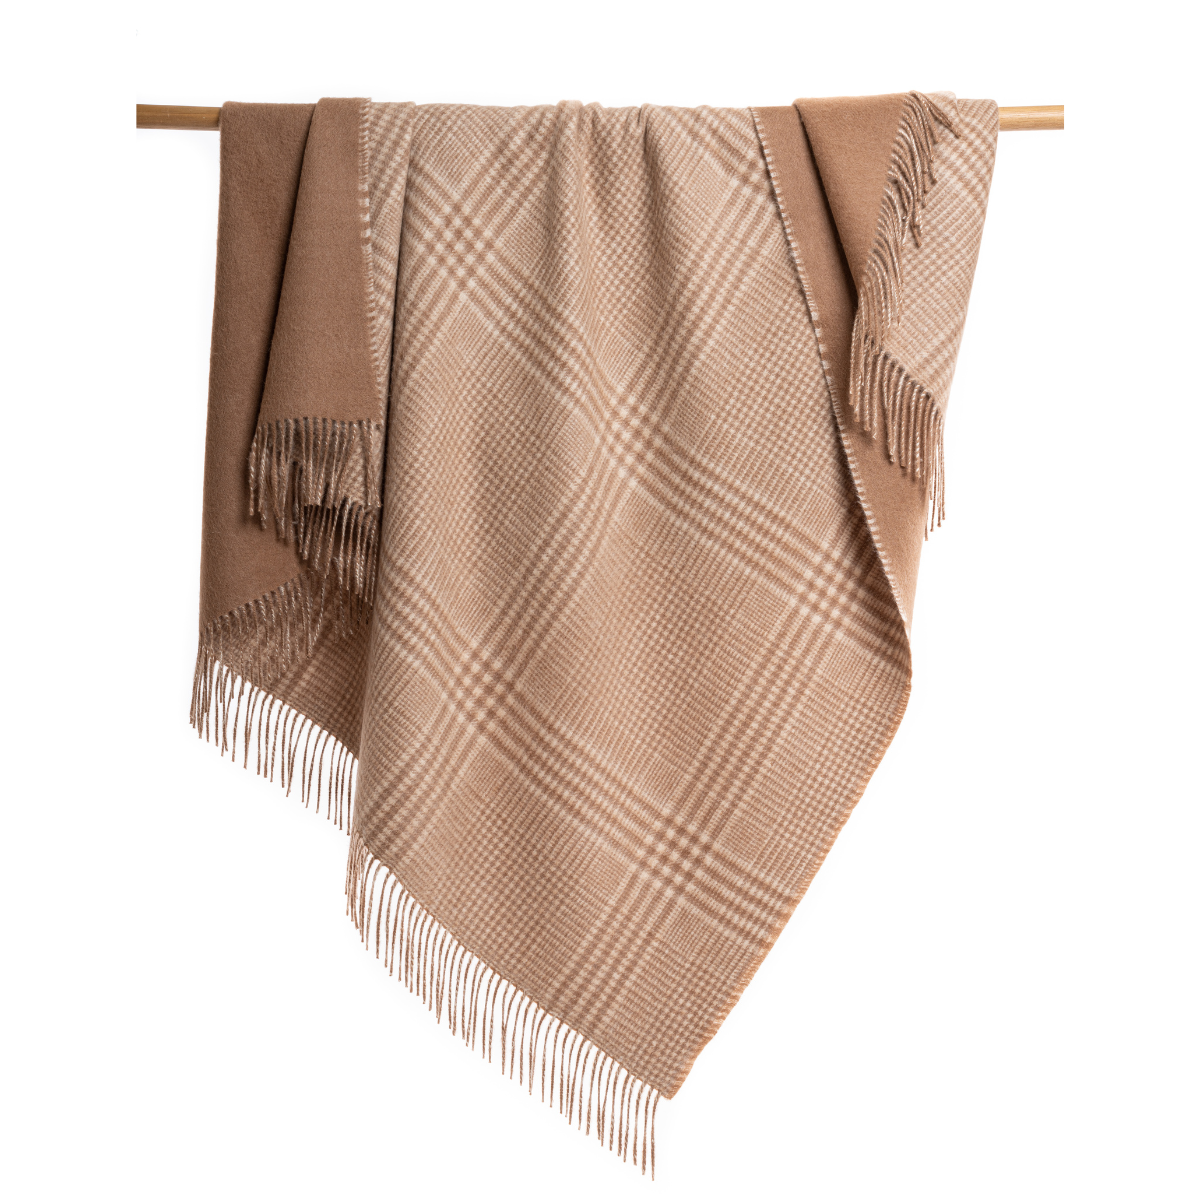 An Alpacas of Montana soft cozy luxury warm roasted chestnut brown plaid blanket with a tasseled edge.